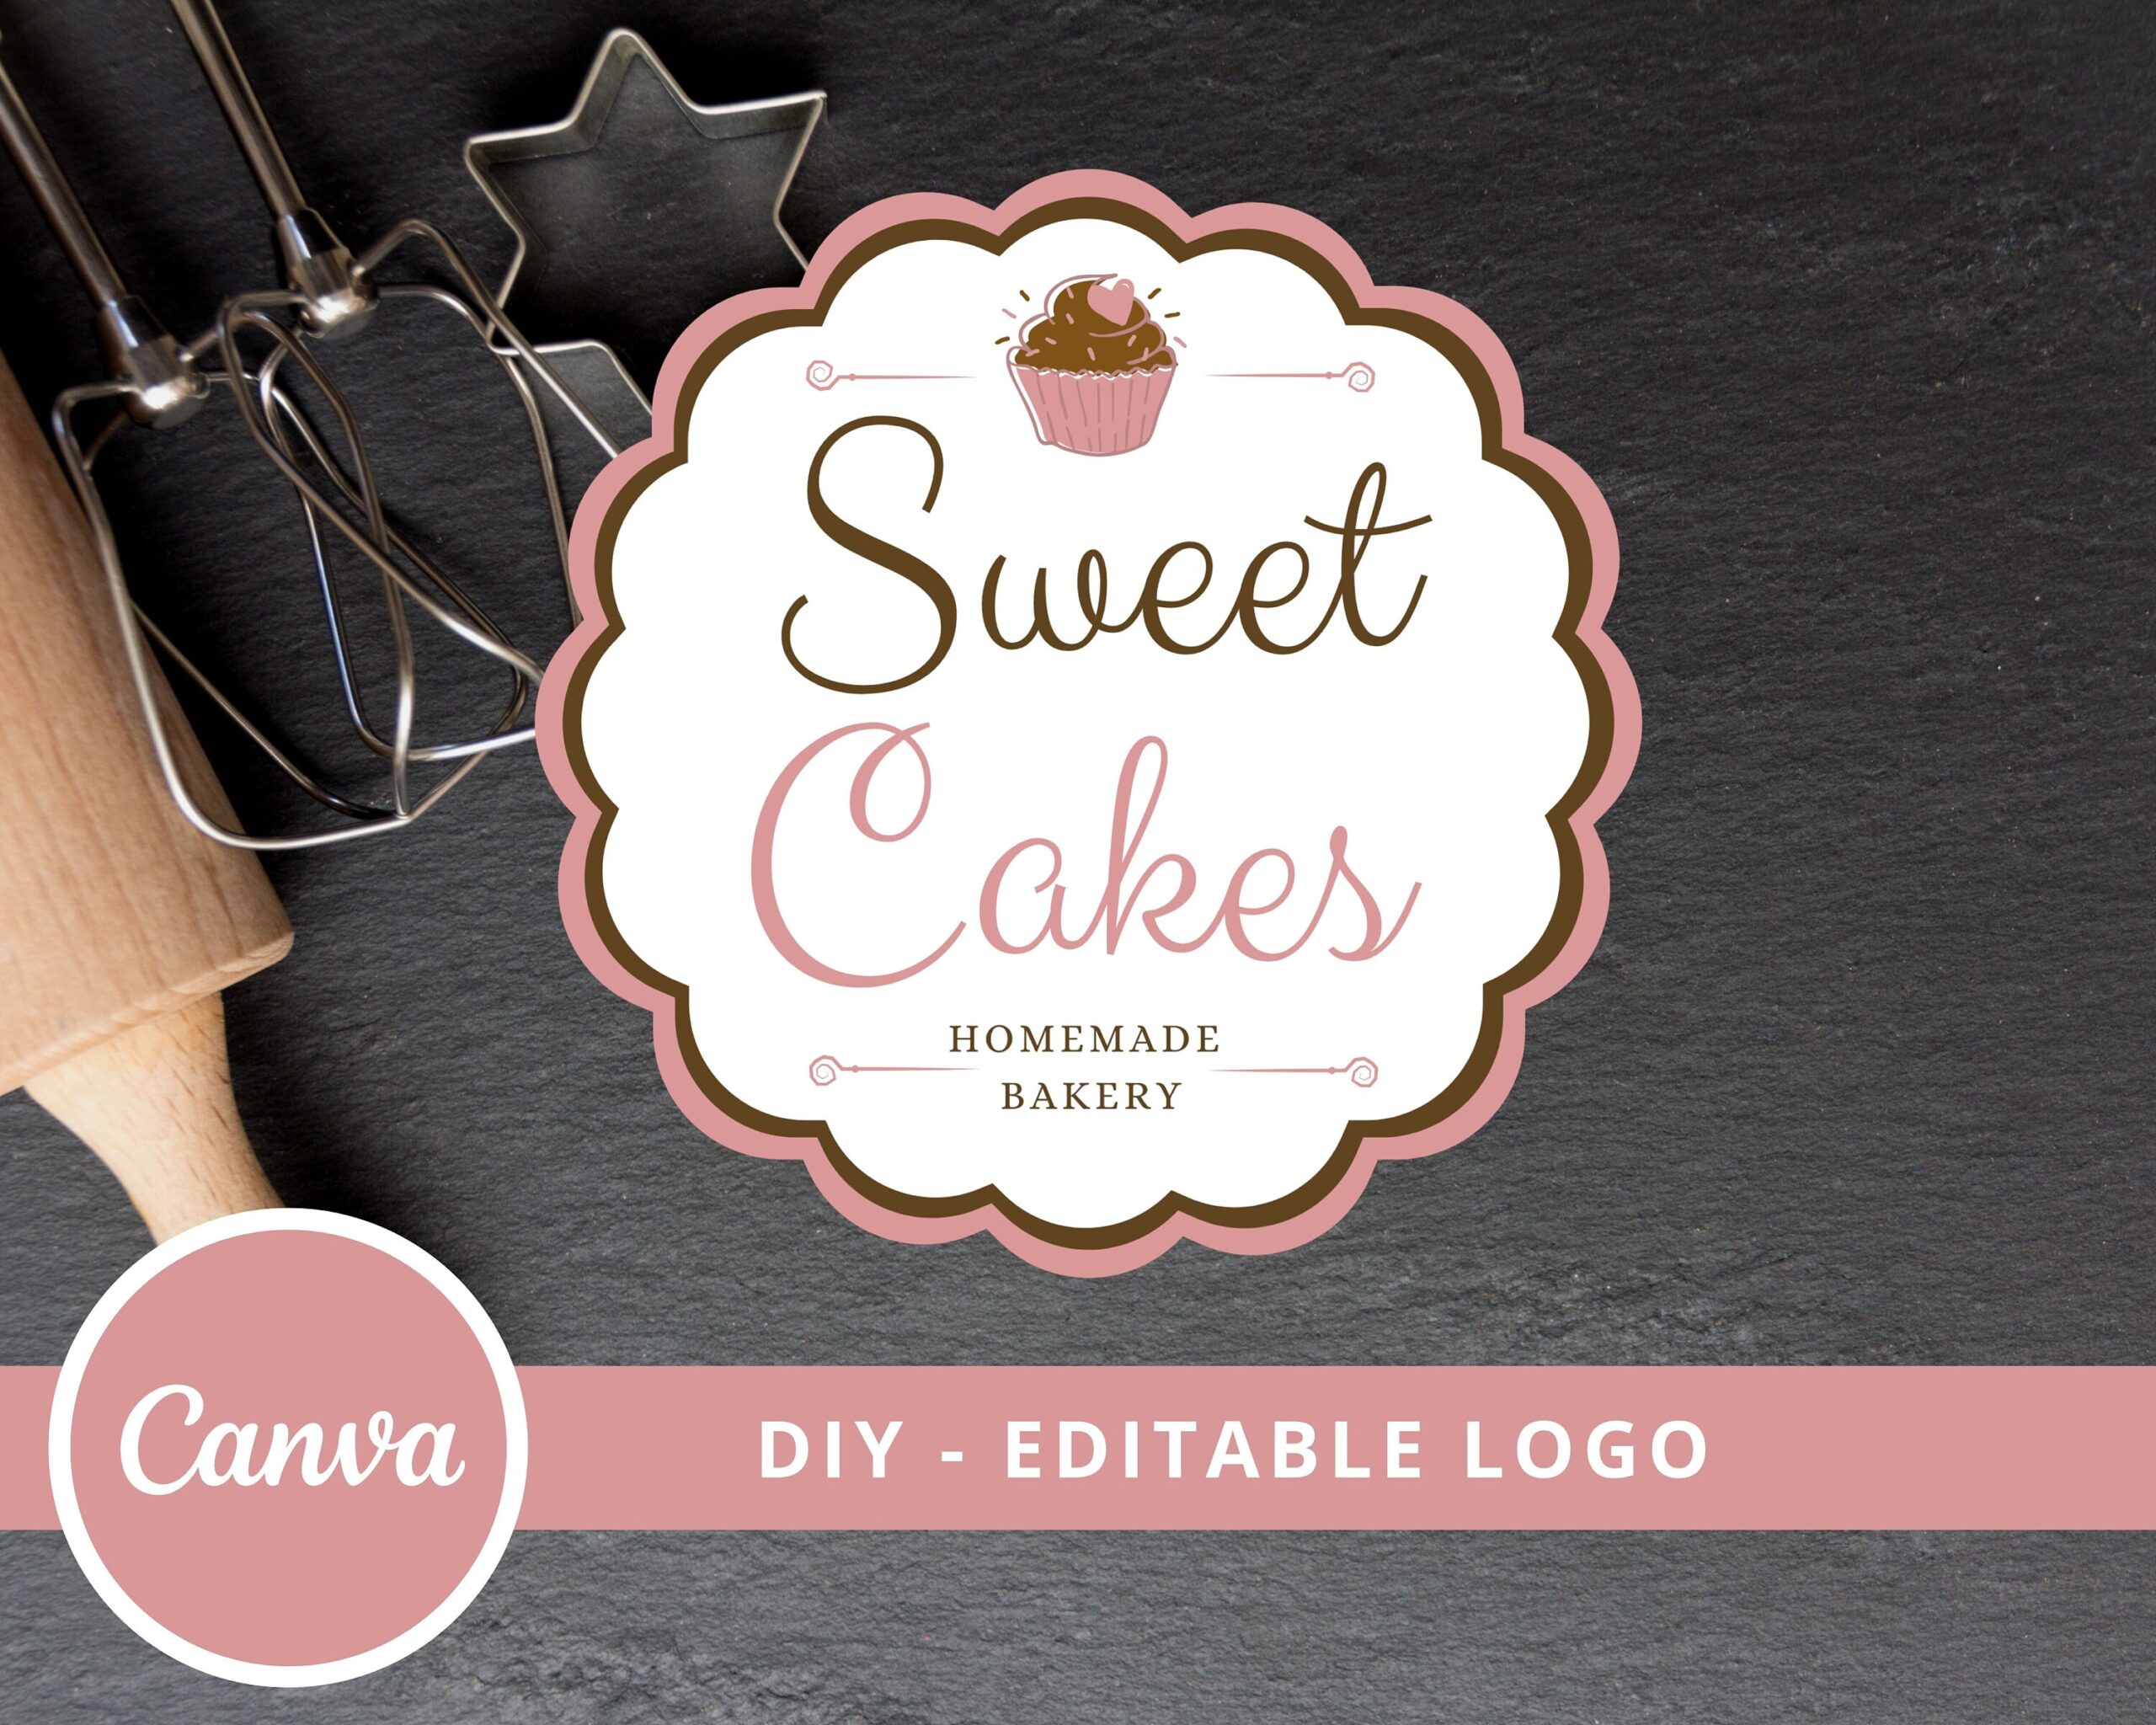 DIY Bakery Logo -  Edit Yourself Logo Design -  Canva Template for Baking Logo -  Cupcake -  Sweets Dessert Shop -  Chef Baker -  Cake -  Instant Download